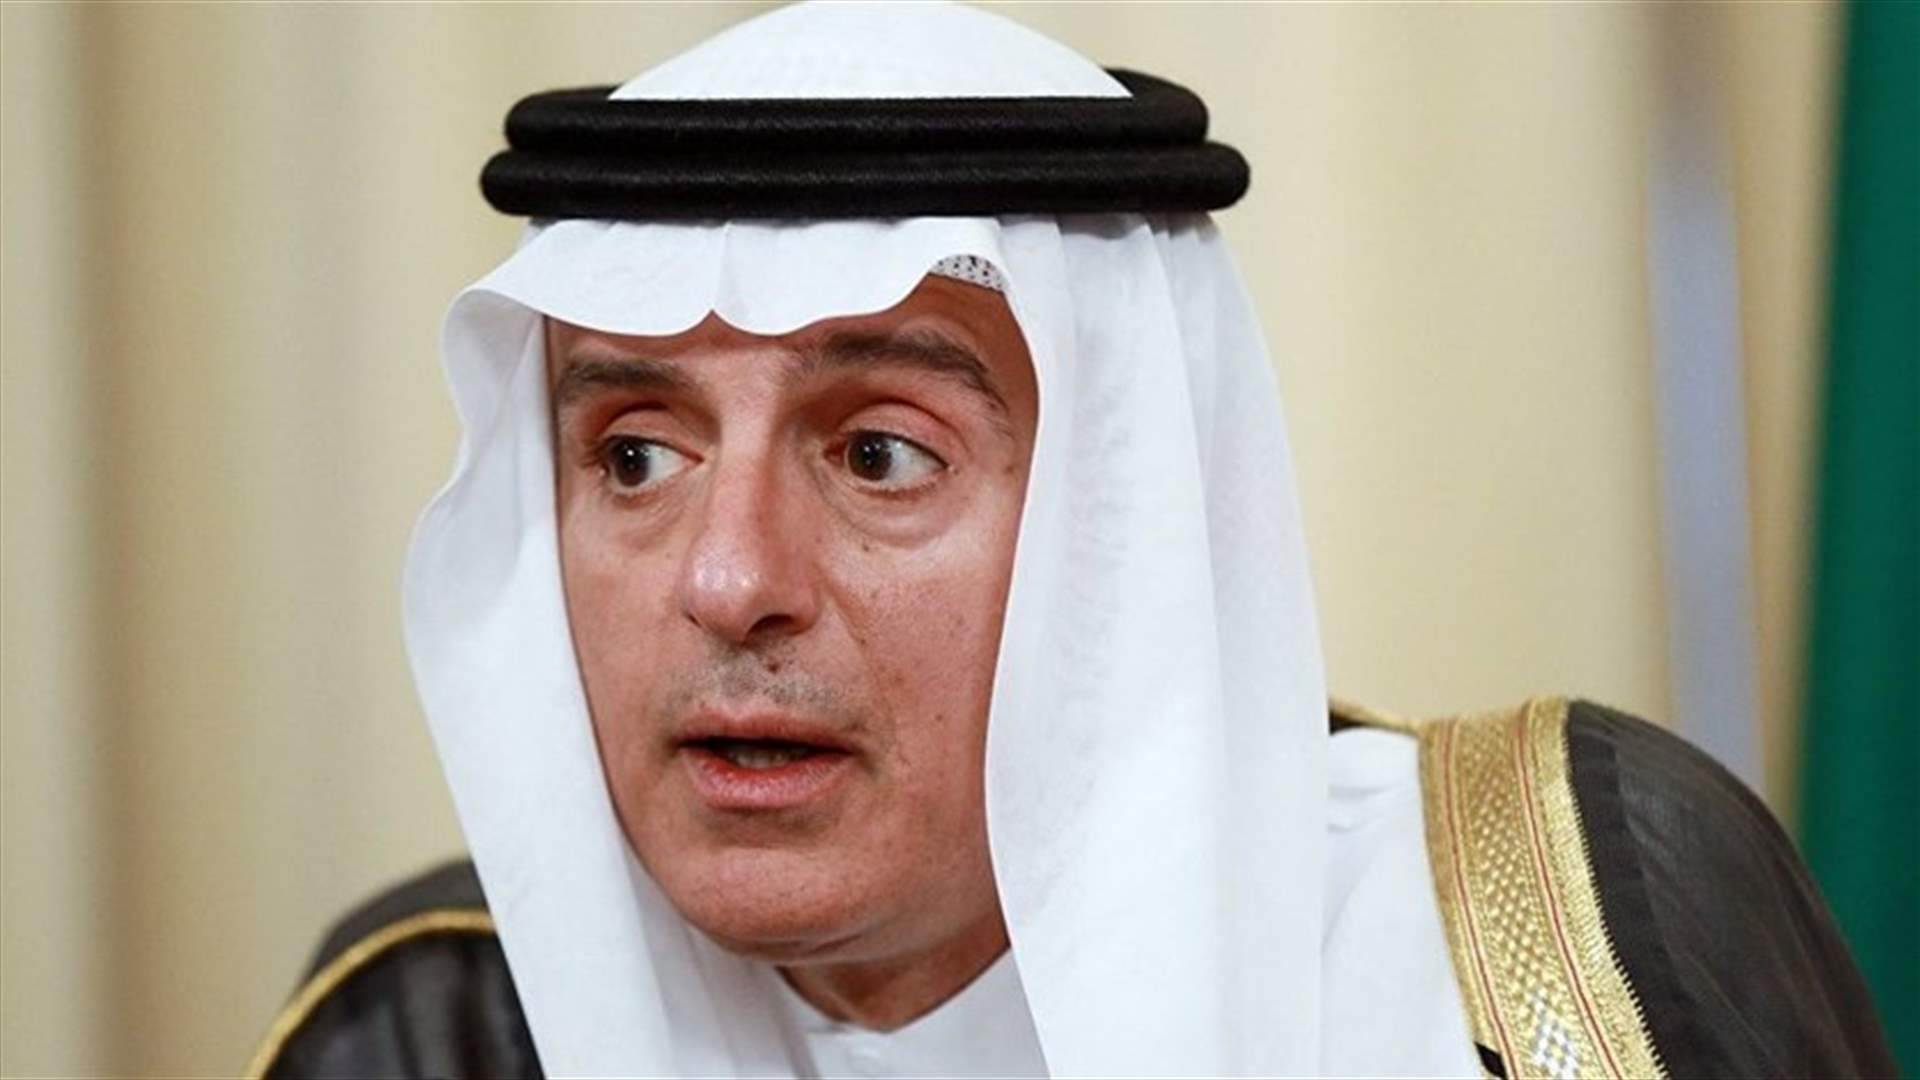 Saudis do not know how Khashoggi was killed -foreign minister